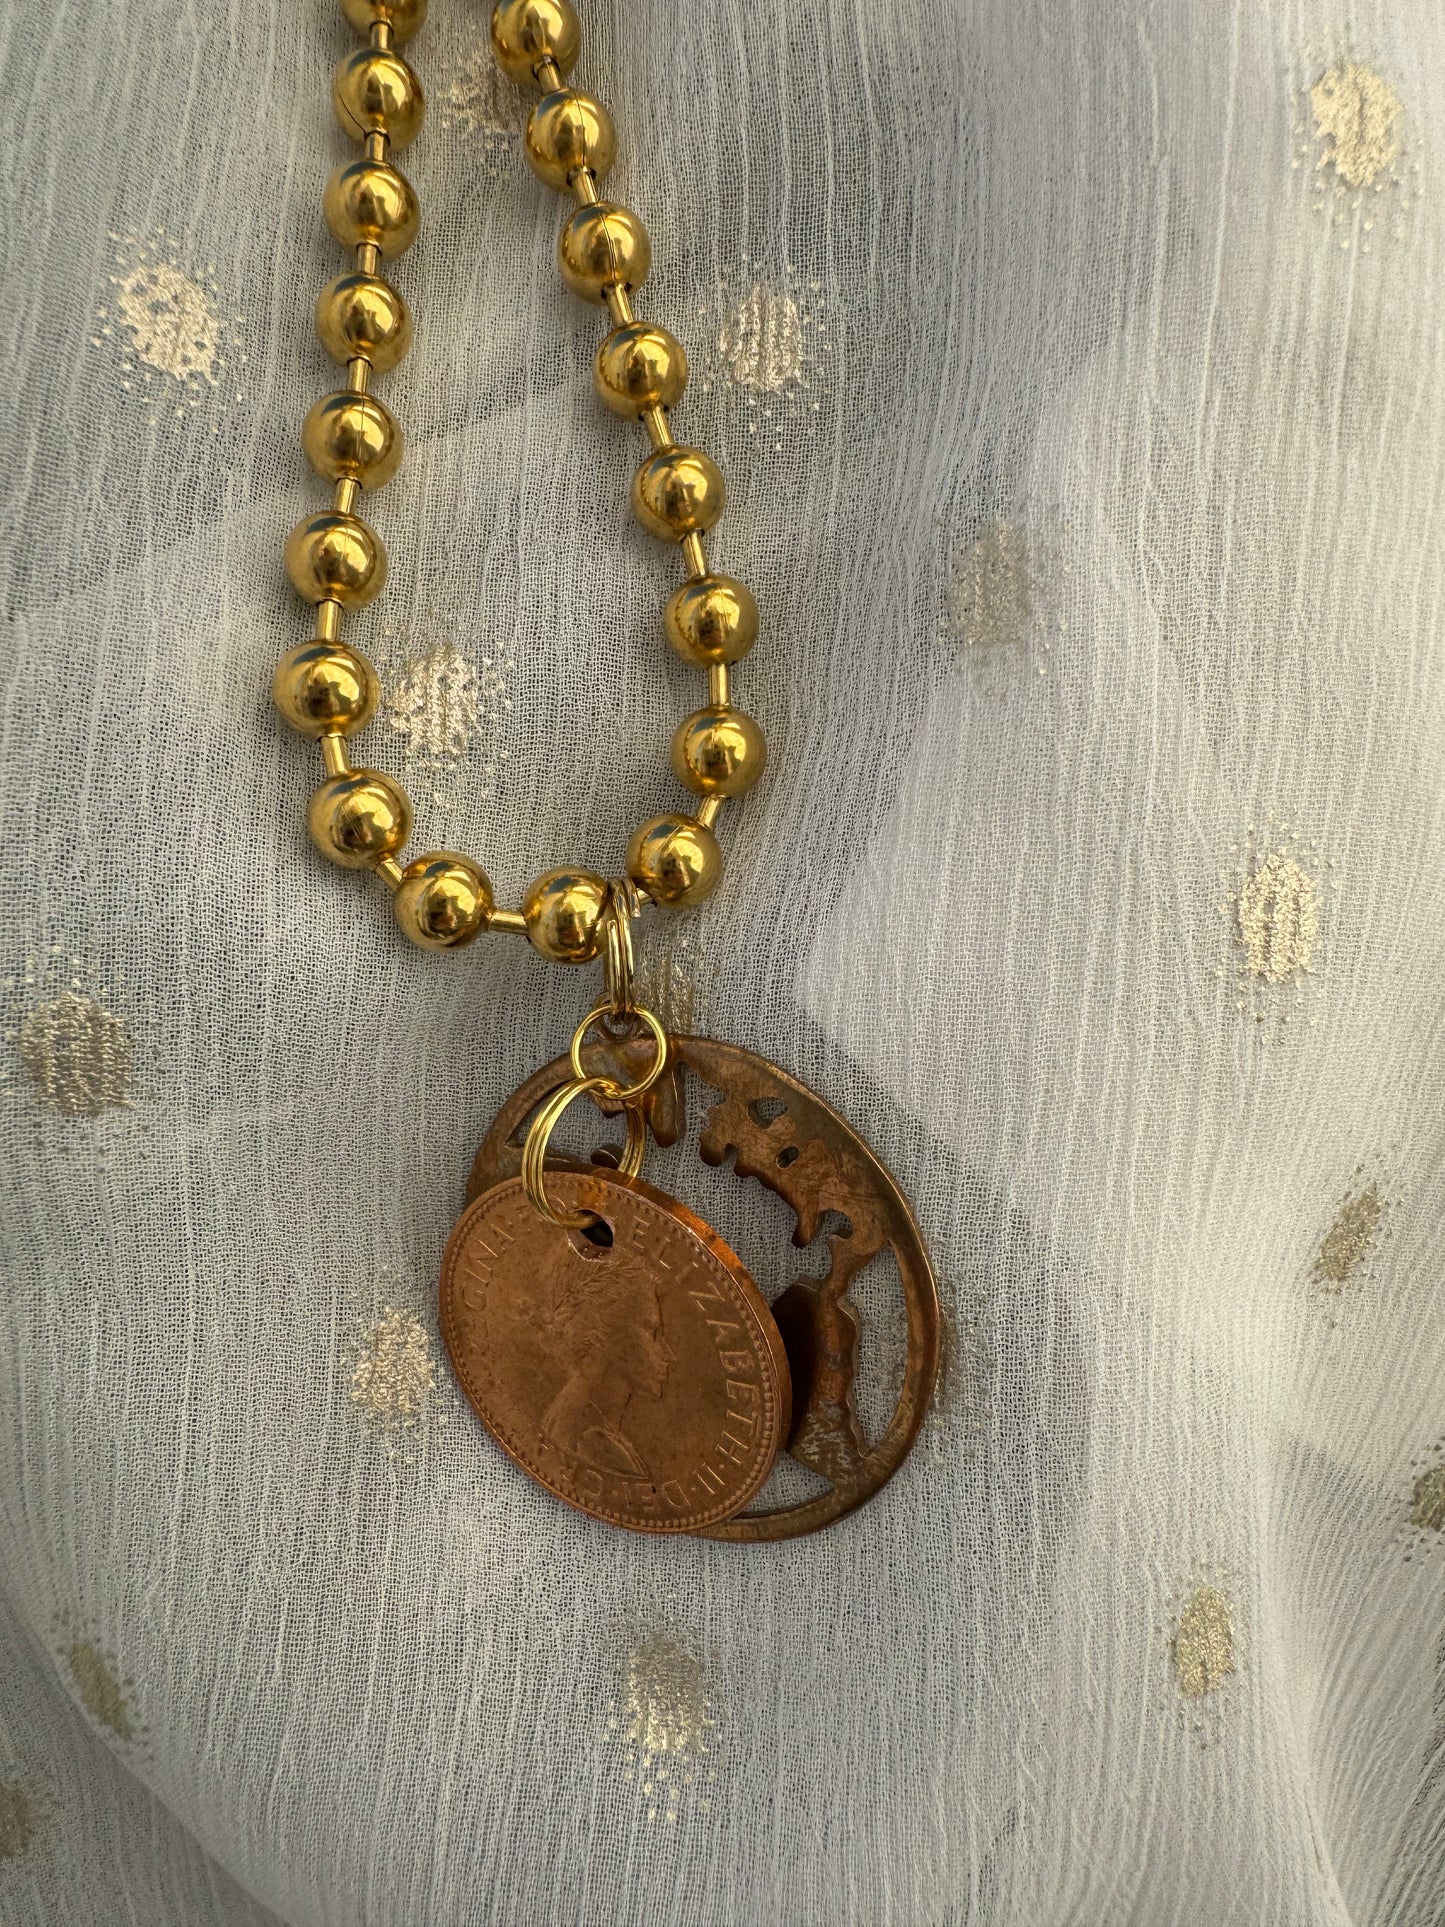 World Traveler Vintage Queen Elizabeth Coin Necklace